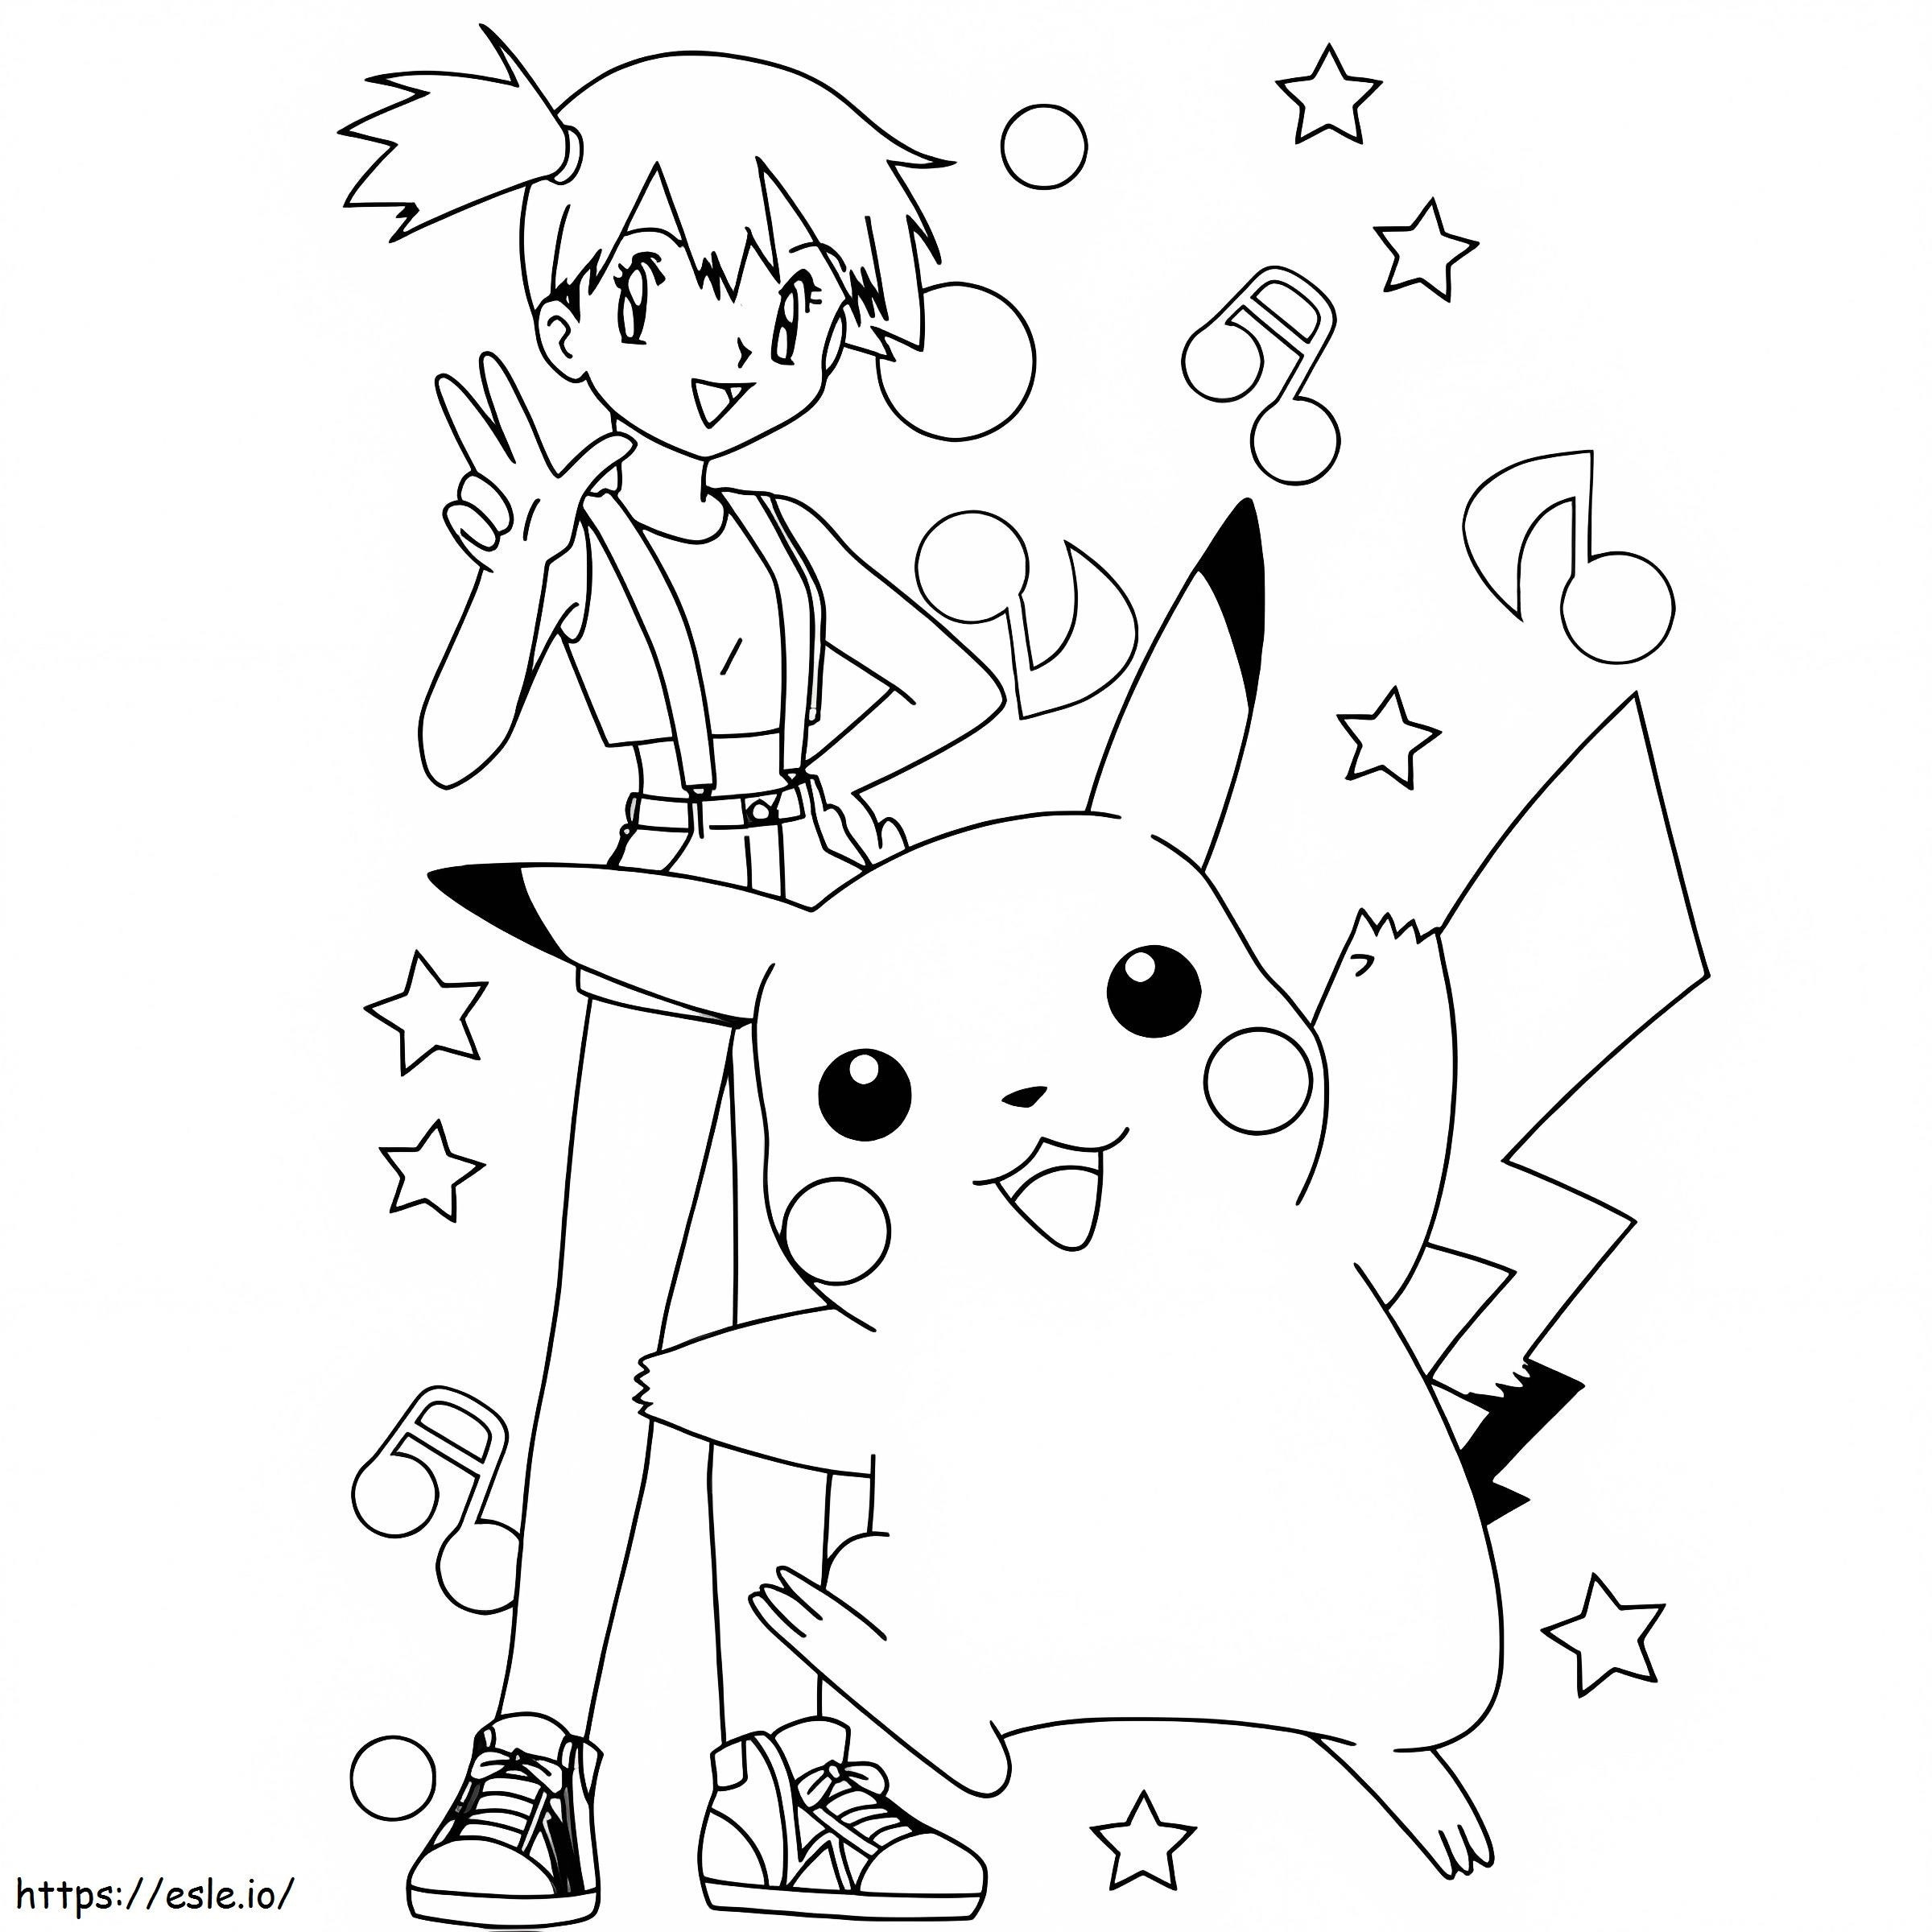 Kasumi ve Pikachu boyama